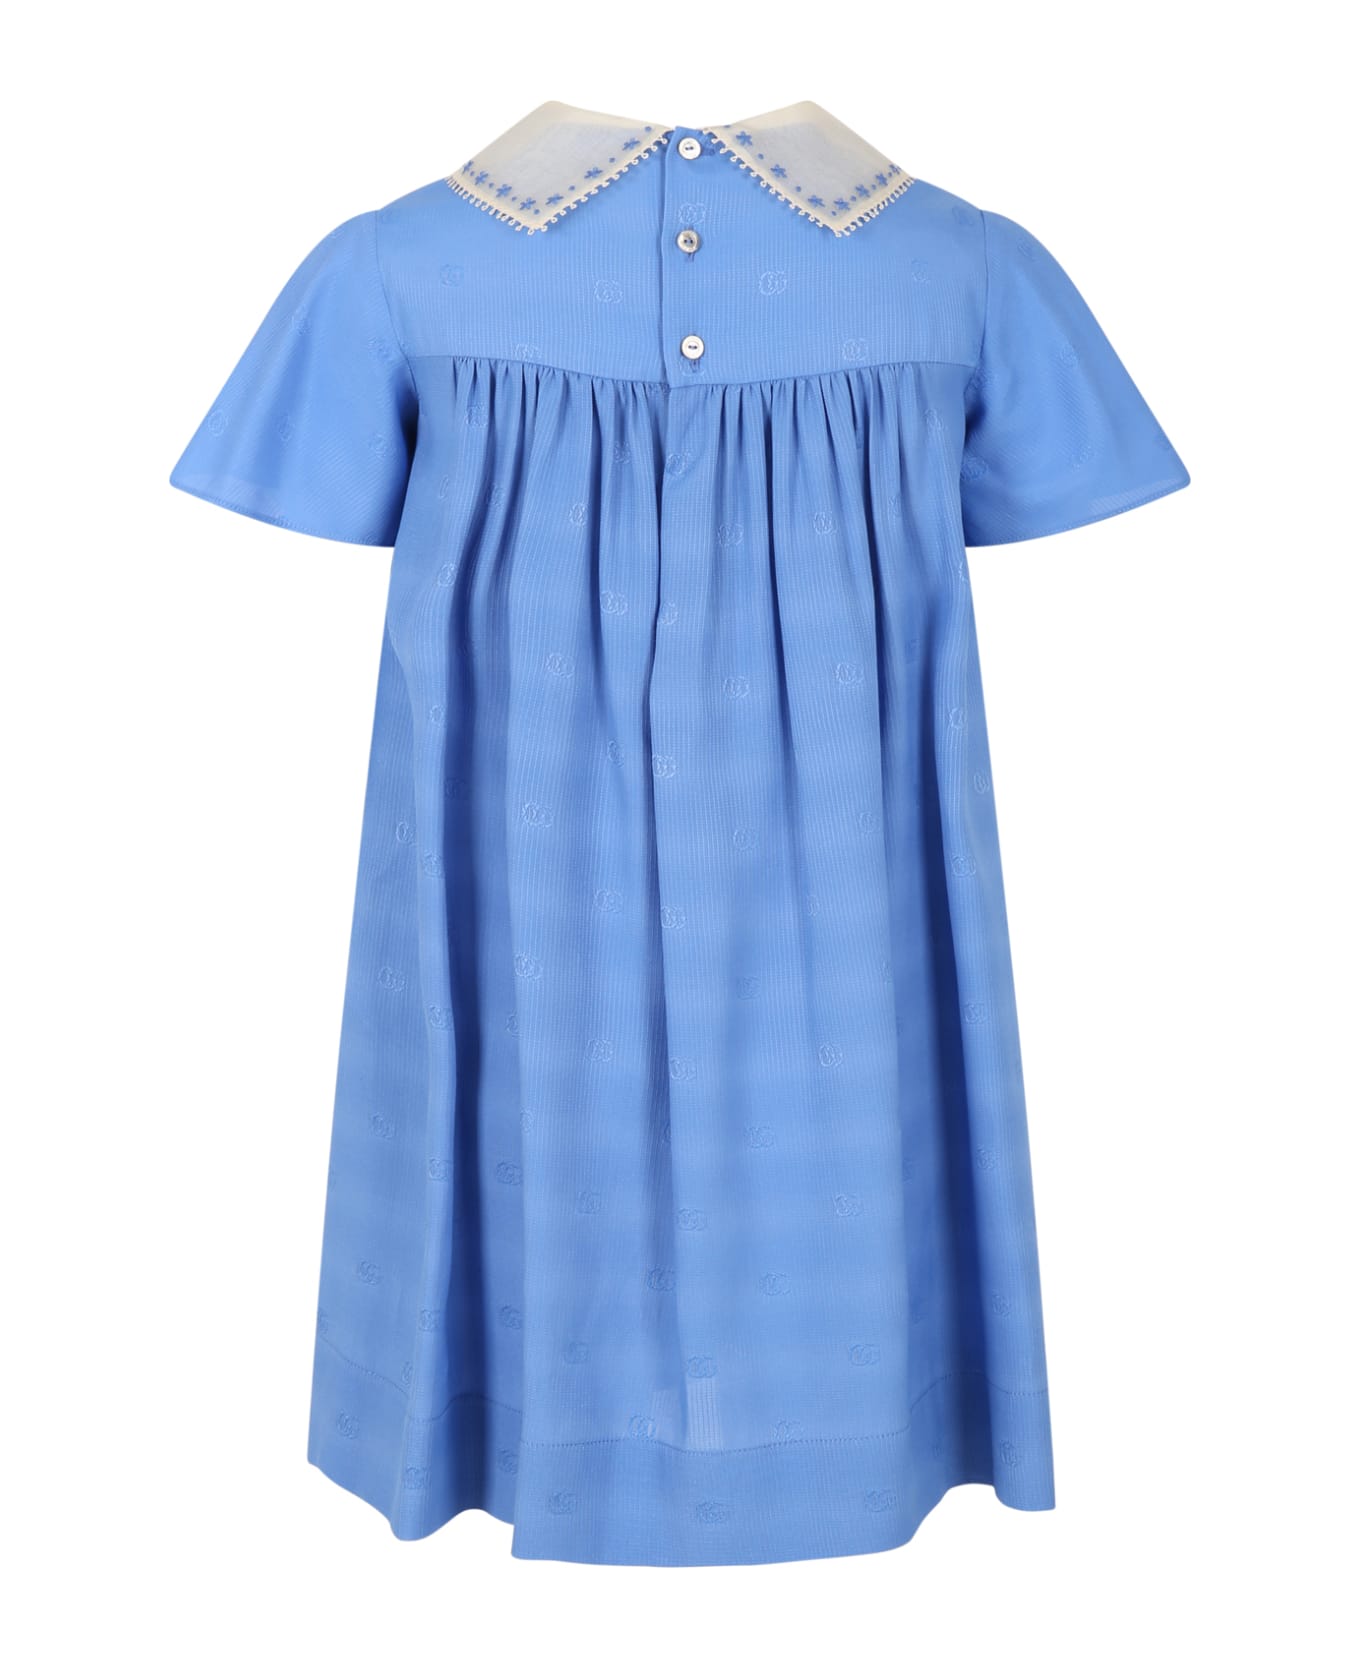 Gucci Light-blue Dress For Girl With Gg - Light Blue